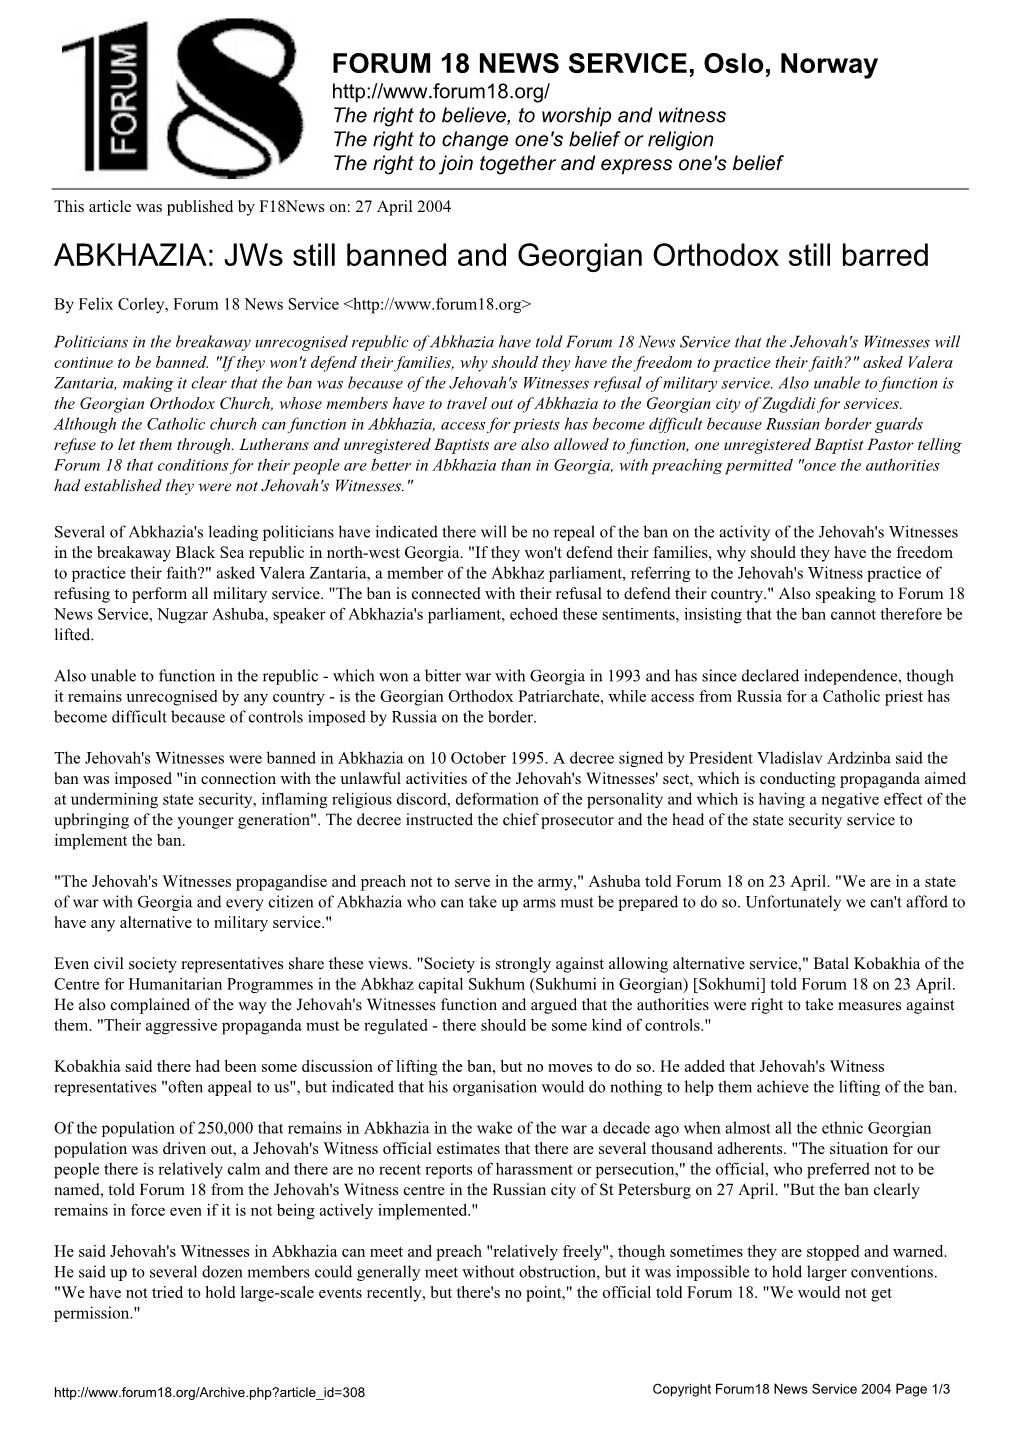 ABKHAZIA: Jws Still Banned and Georgian Orthodox Still Barred